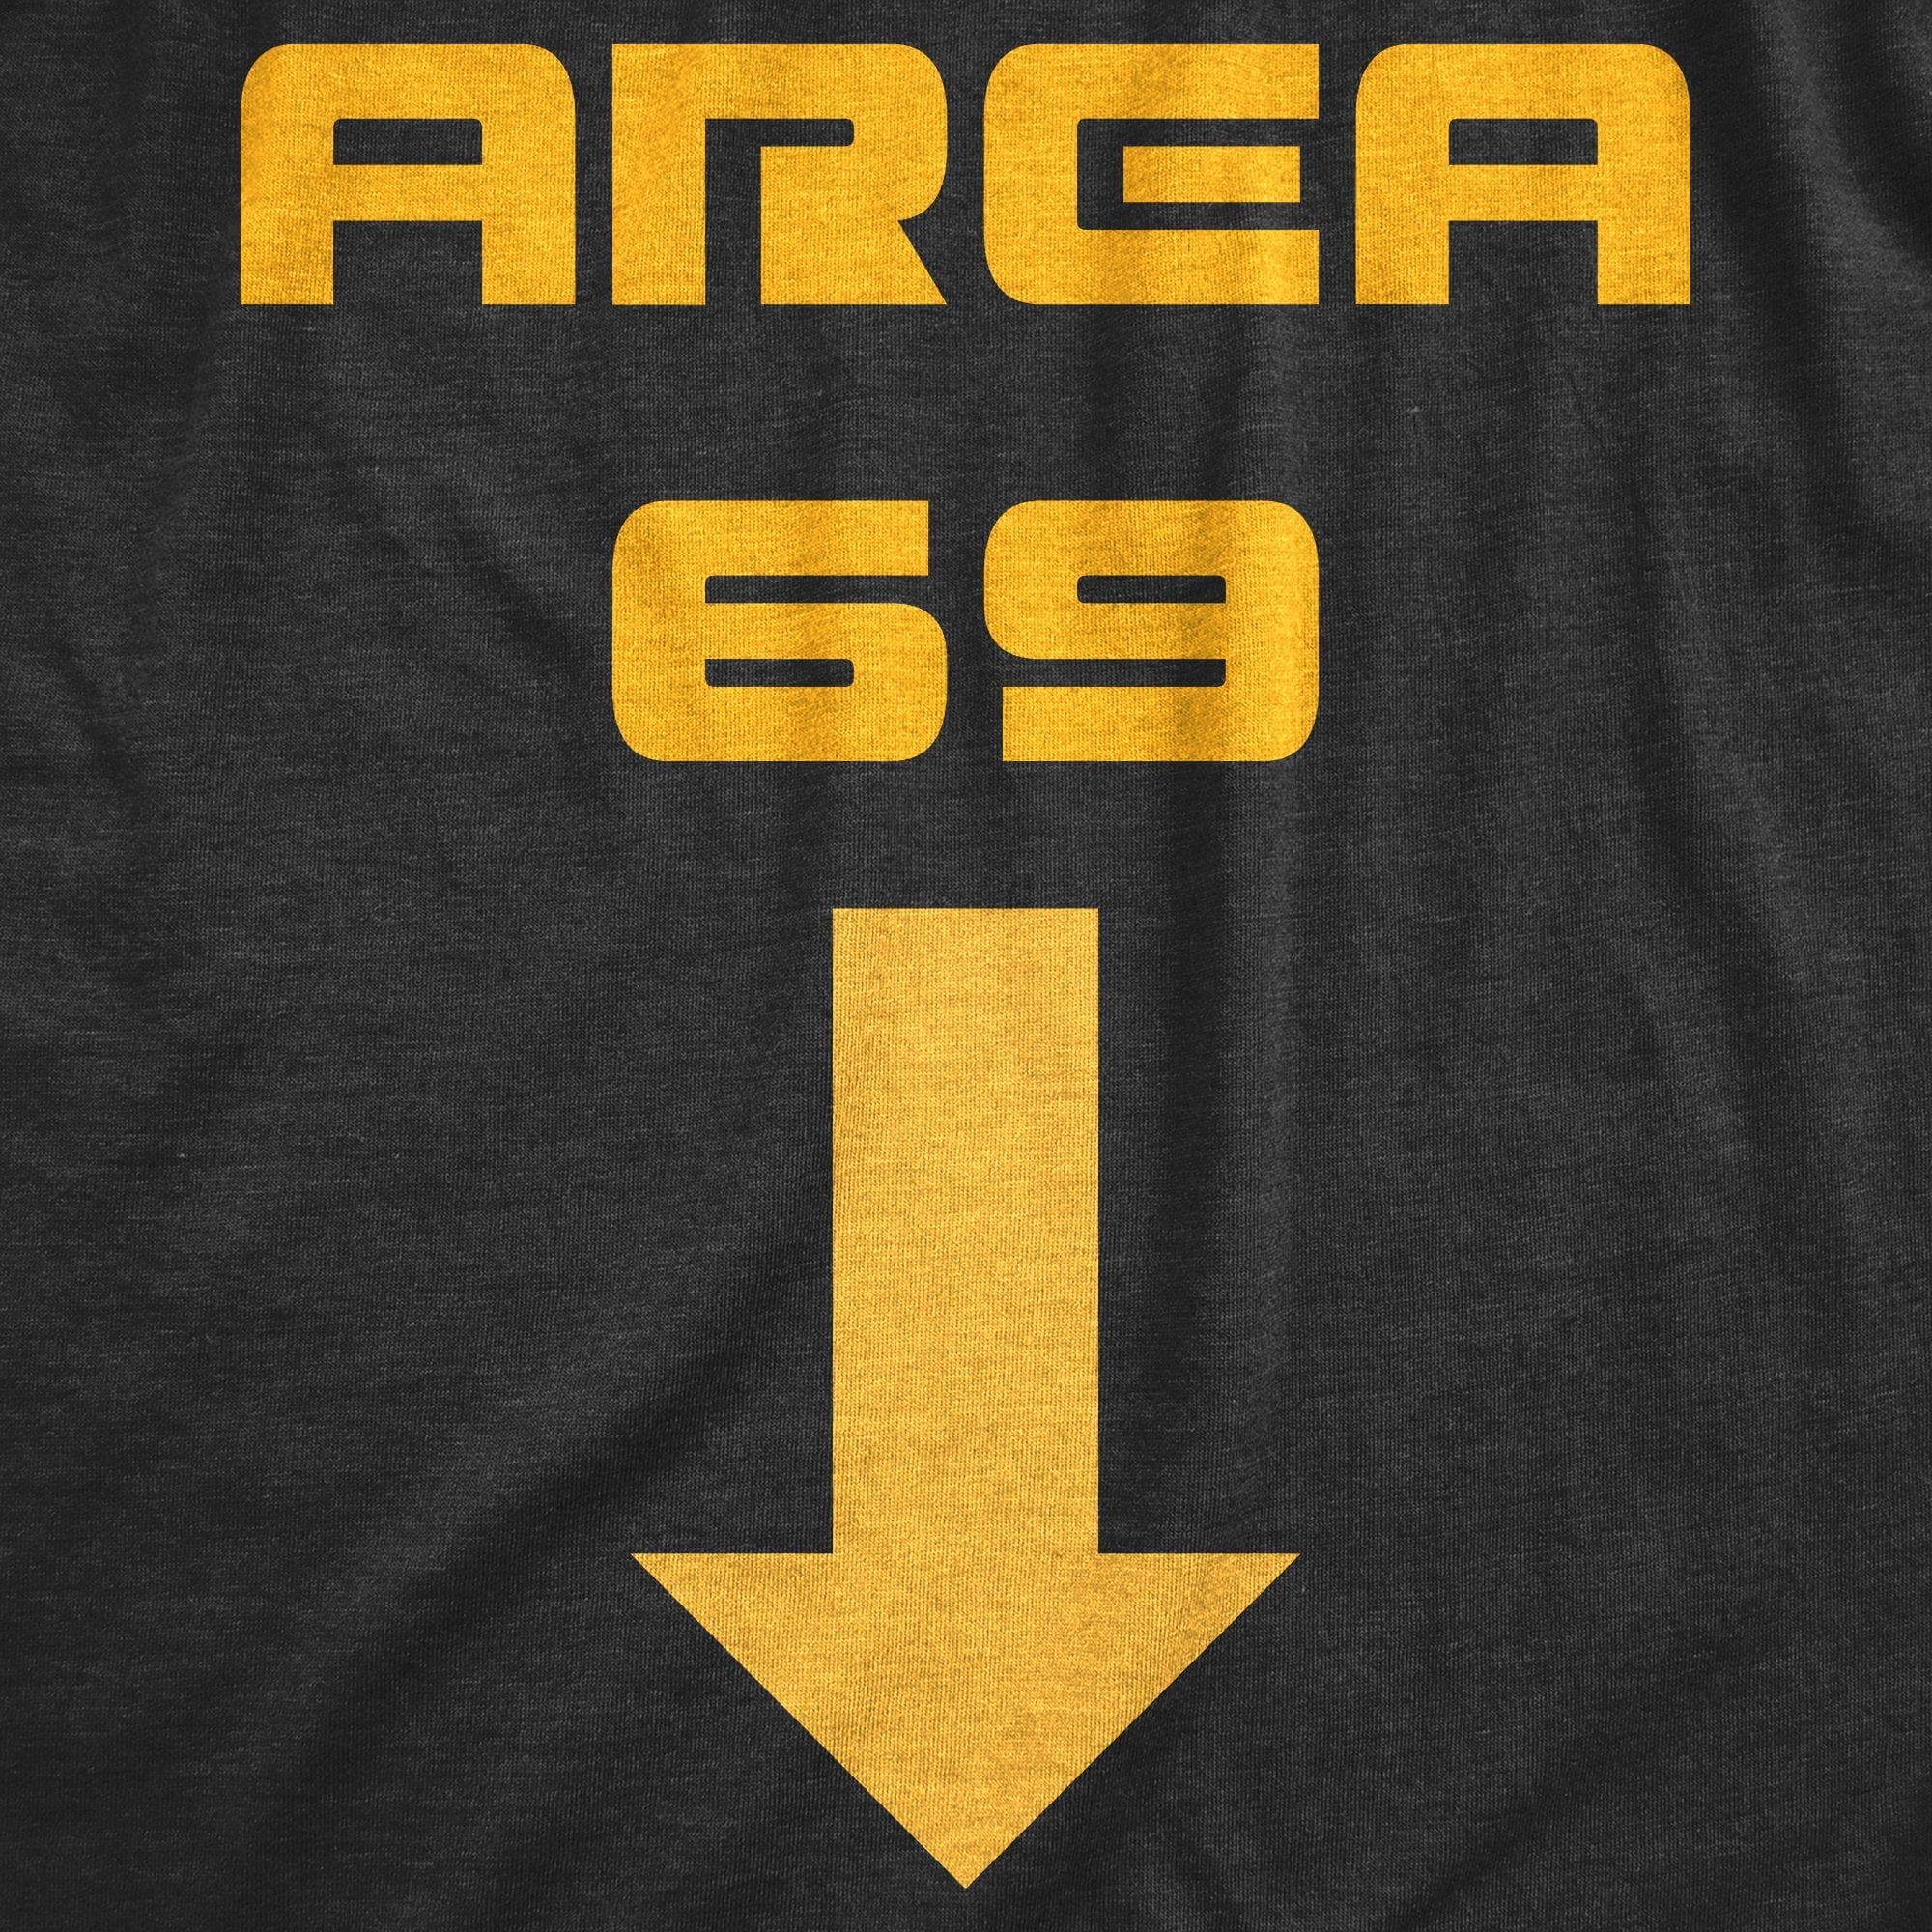 Area 69 Men's Tshirt - Crazy Dog T-Shirts